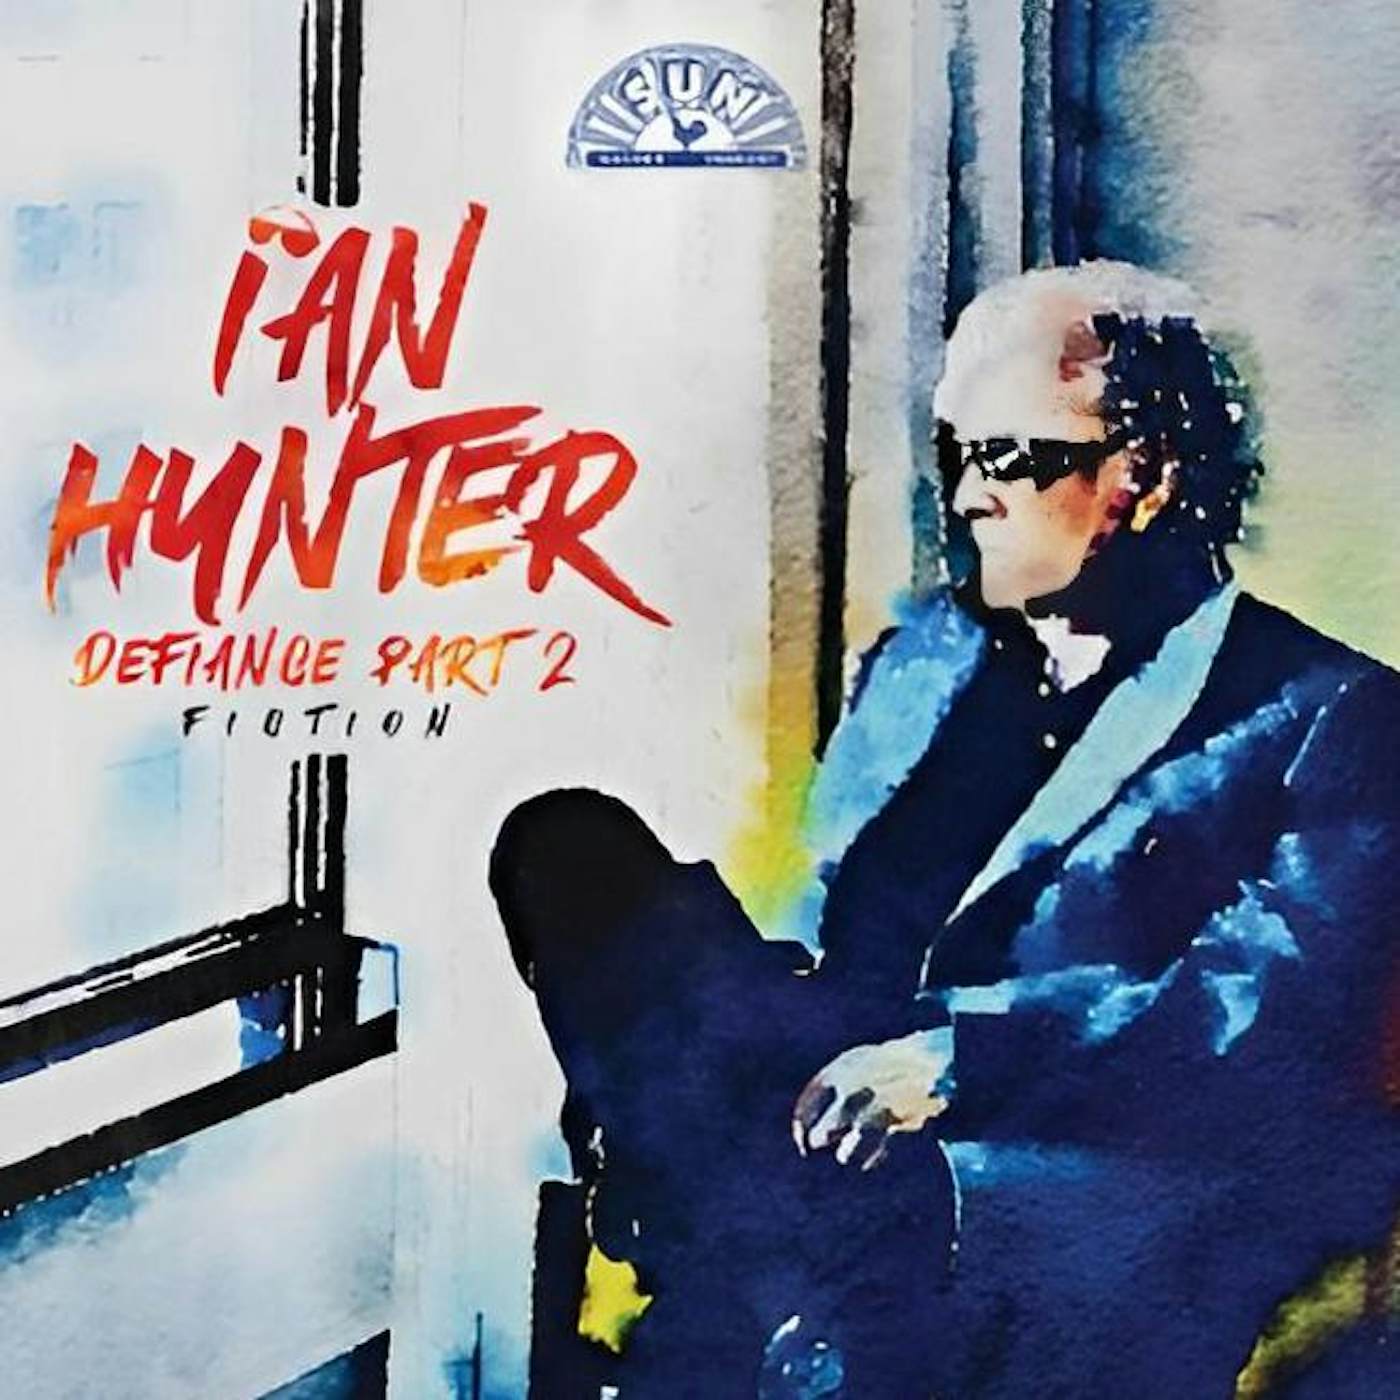 Ian Hunter DEFIANCE PART 2: FICTION Vinyl Record